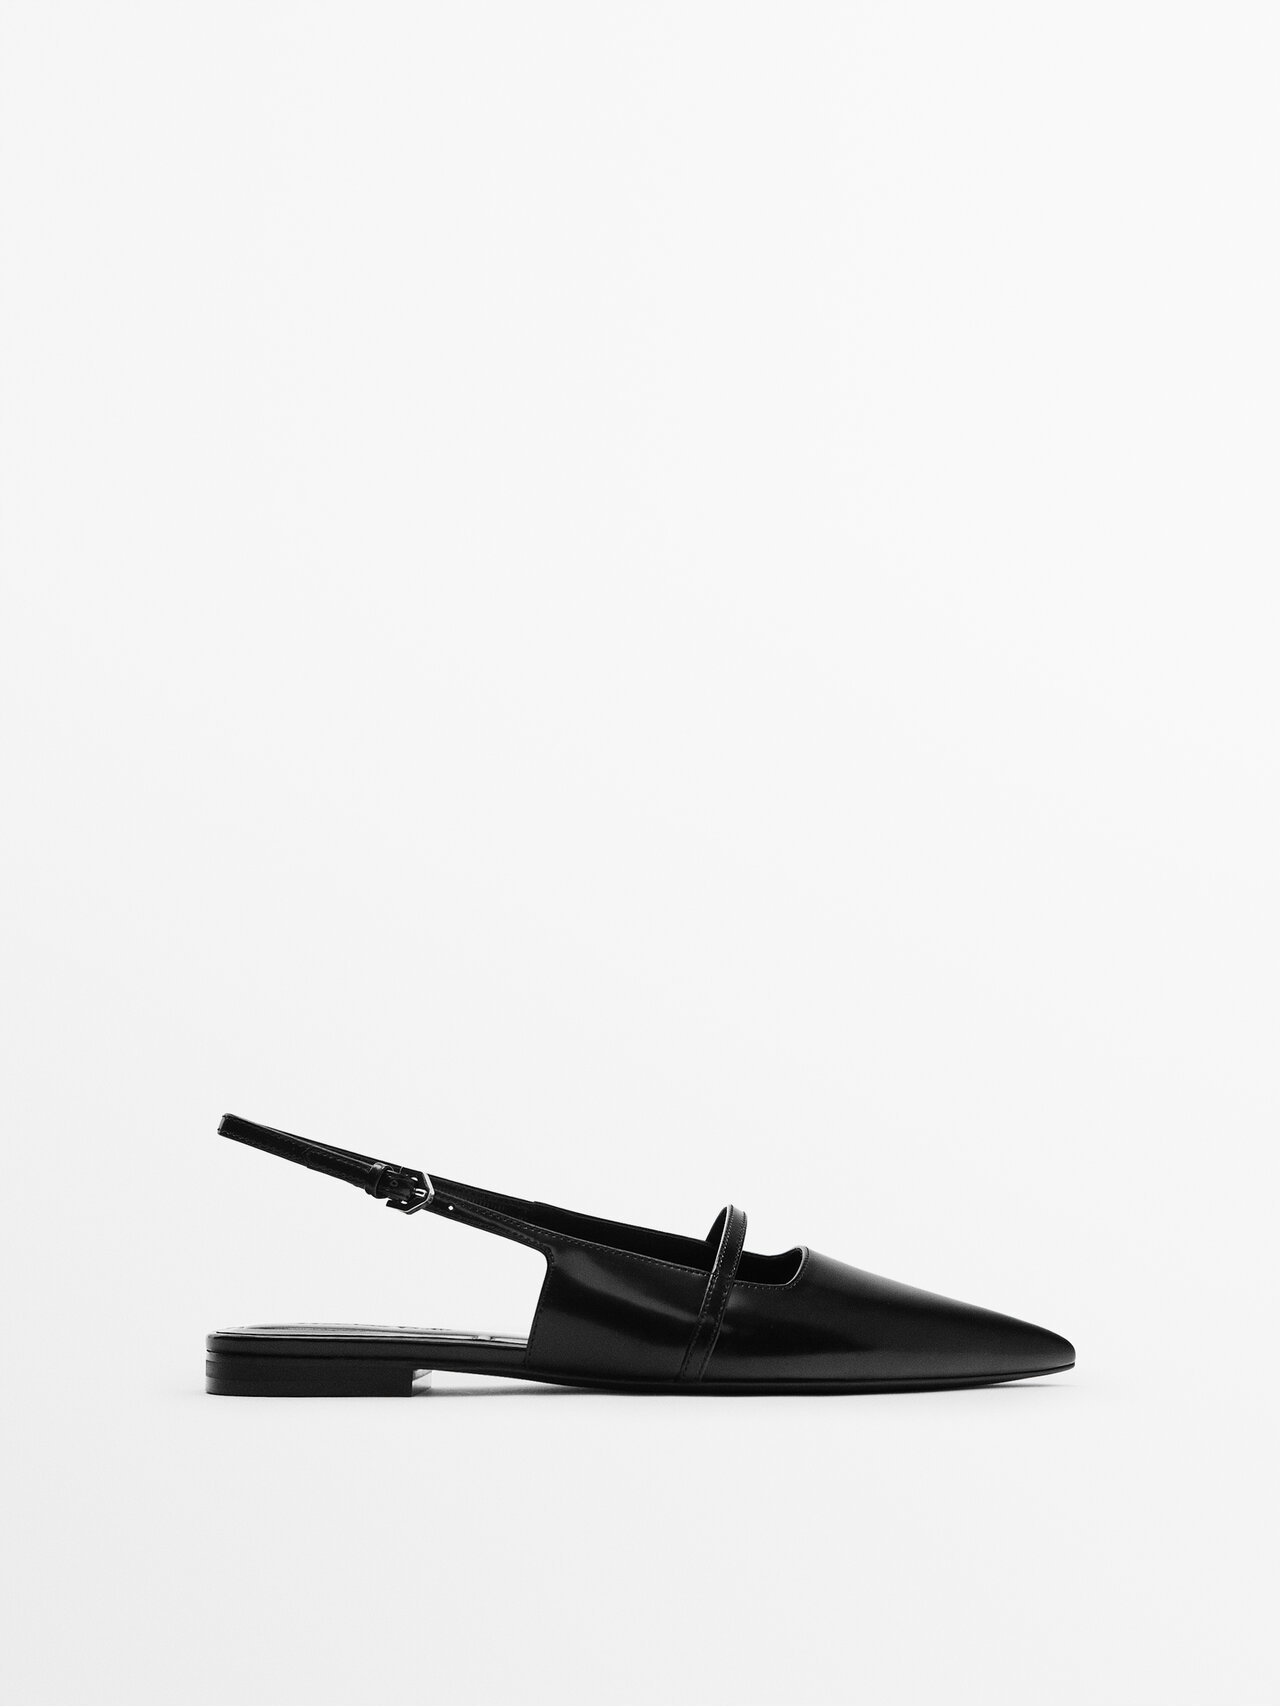 Massimo Dutti Flat Leather Slingback Shoes In Black | ModeSens